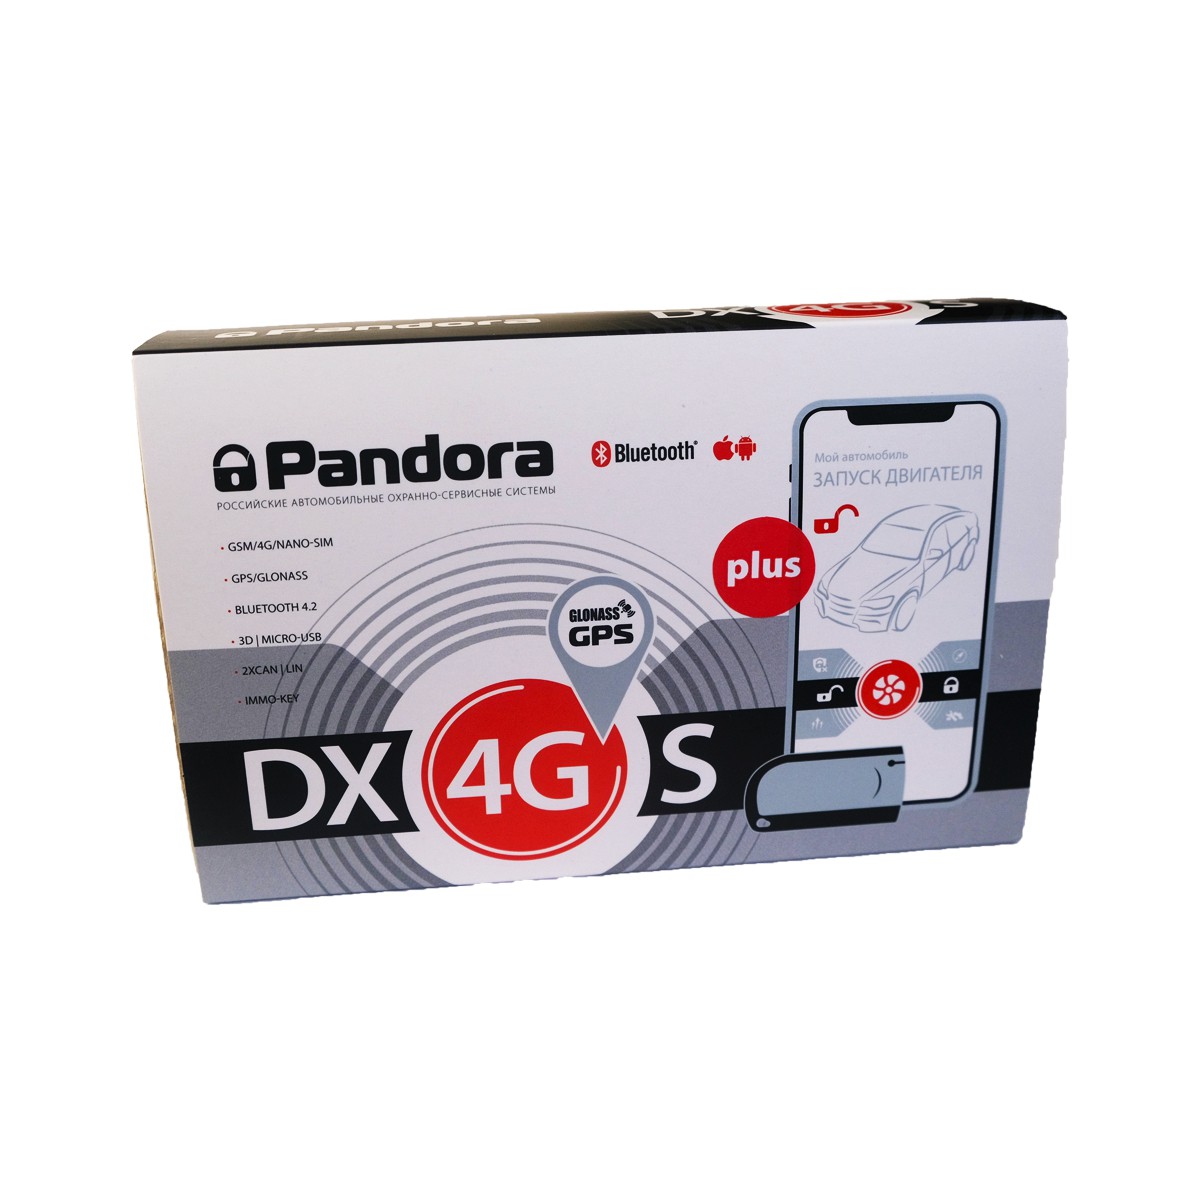 Pandora DX 4GS Plus